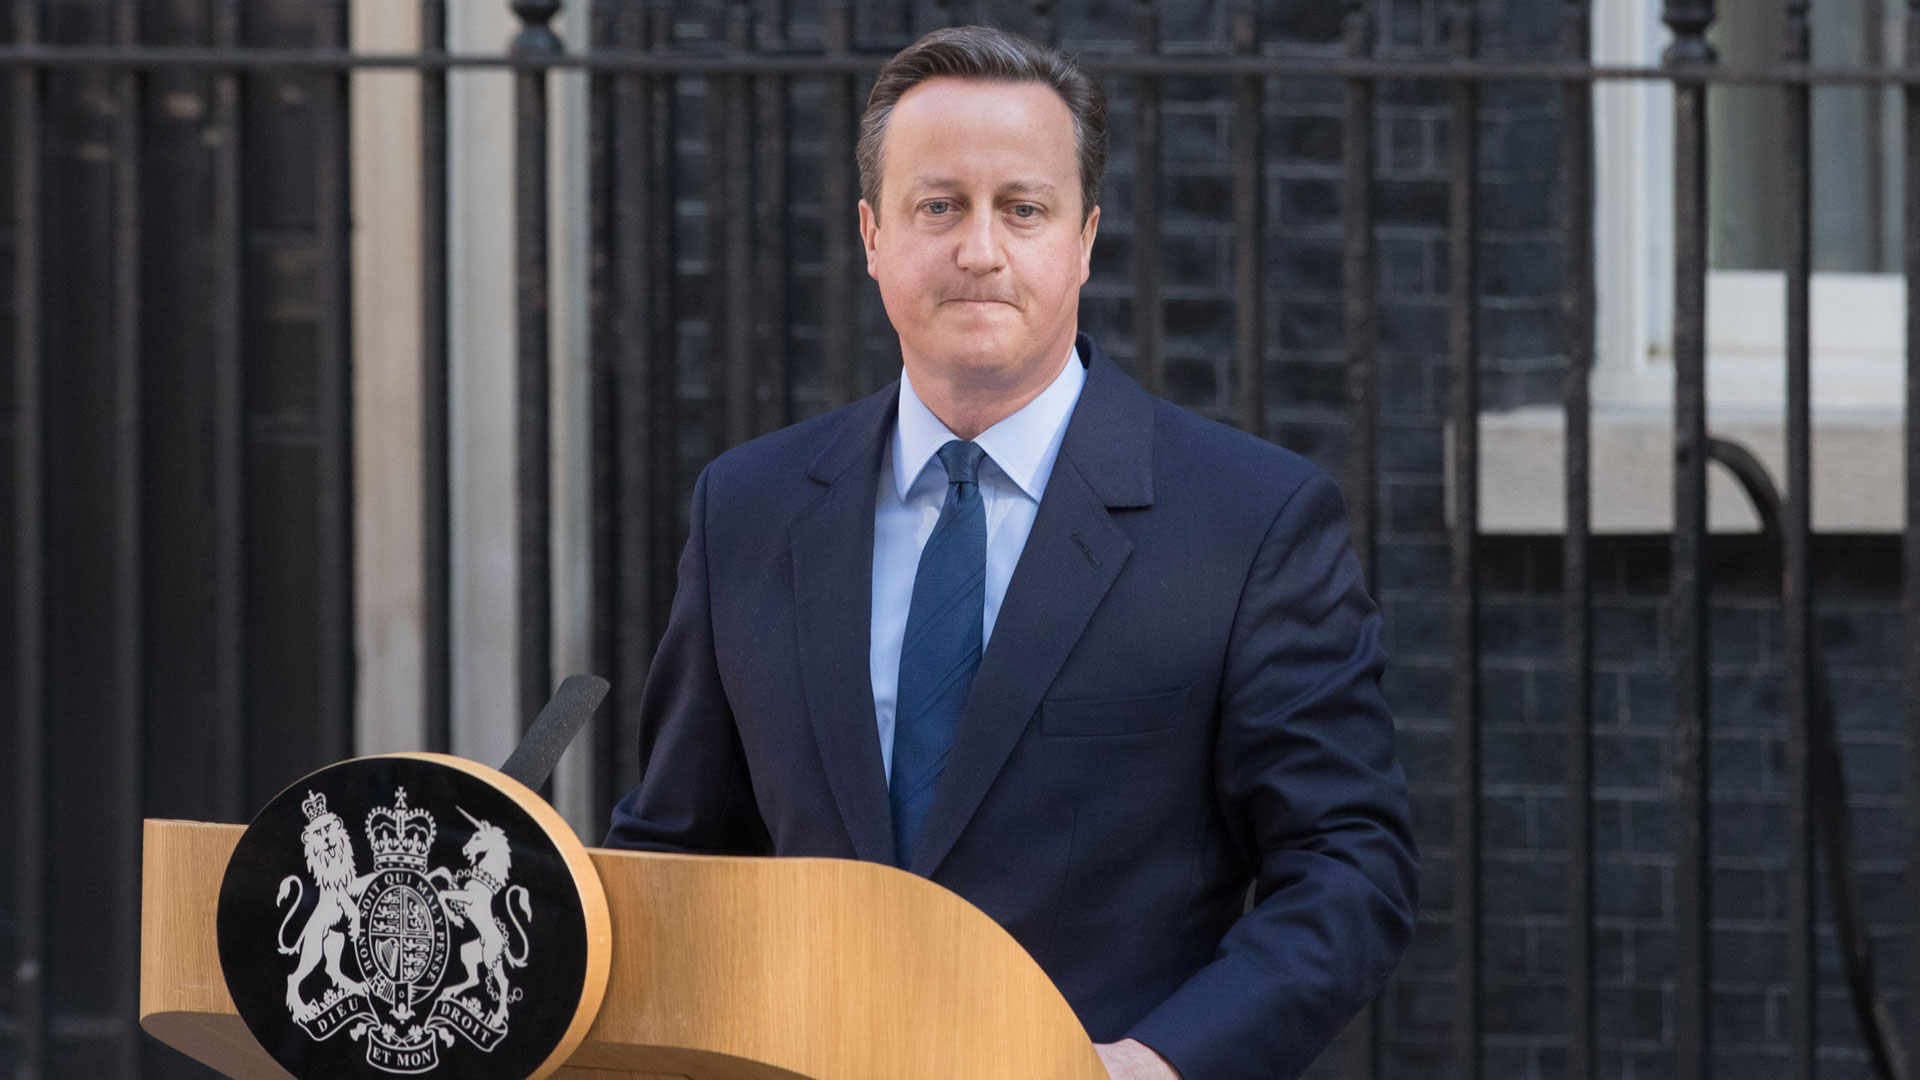 David Cameron am Morgen des 24. Juni 2016, kurz nachdem er seinen Rücktritt als Premierminister bekanntgegeben hat.